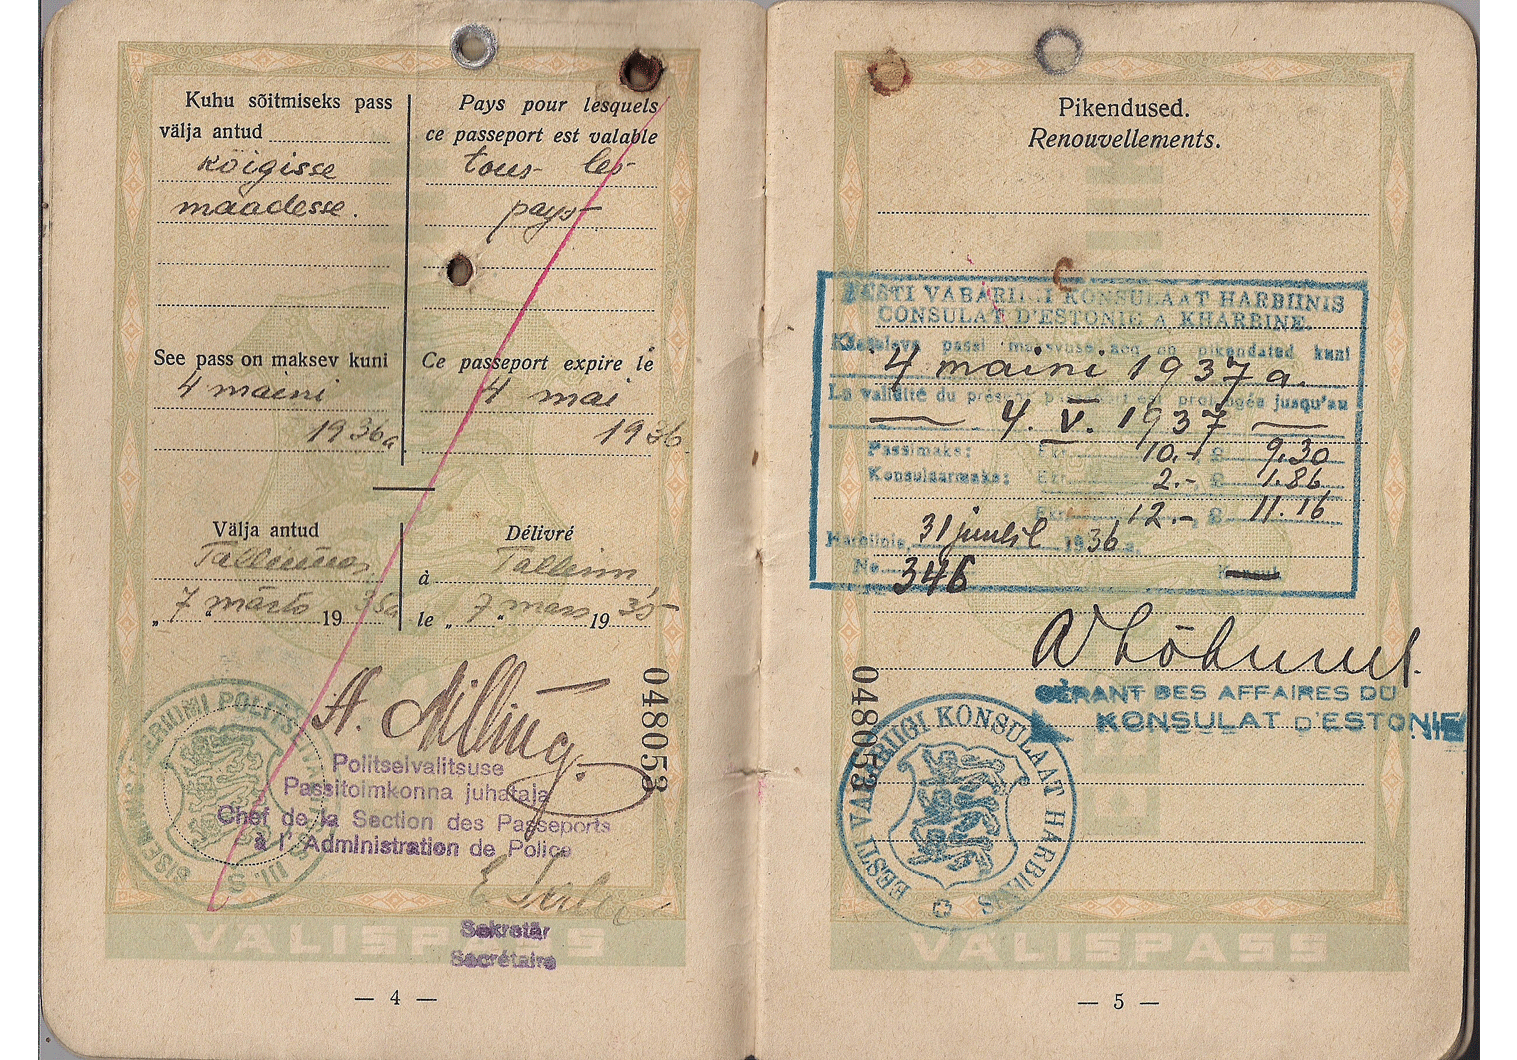 Estonian passport used in Manchuria